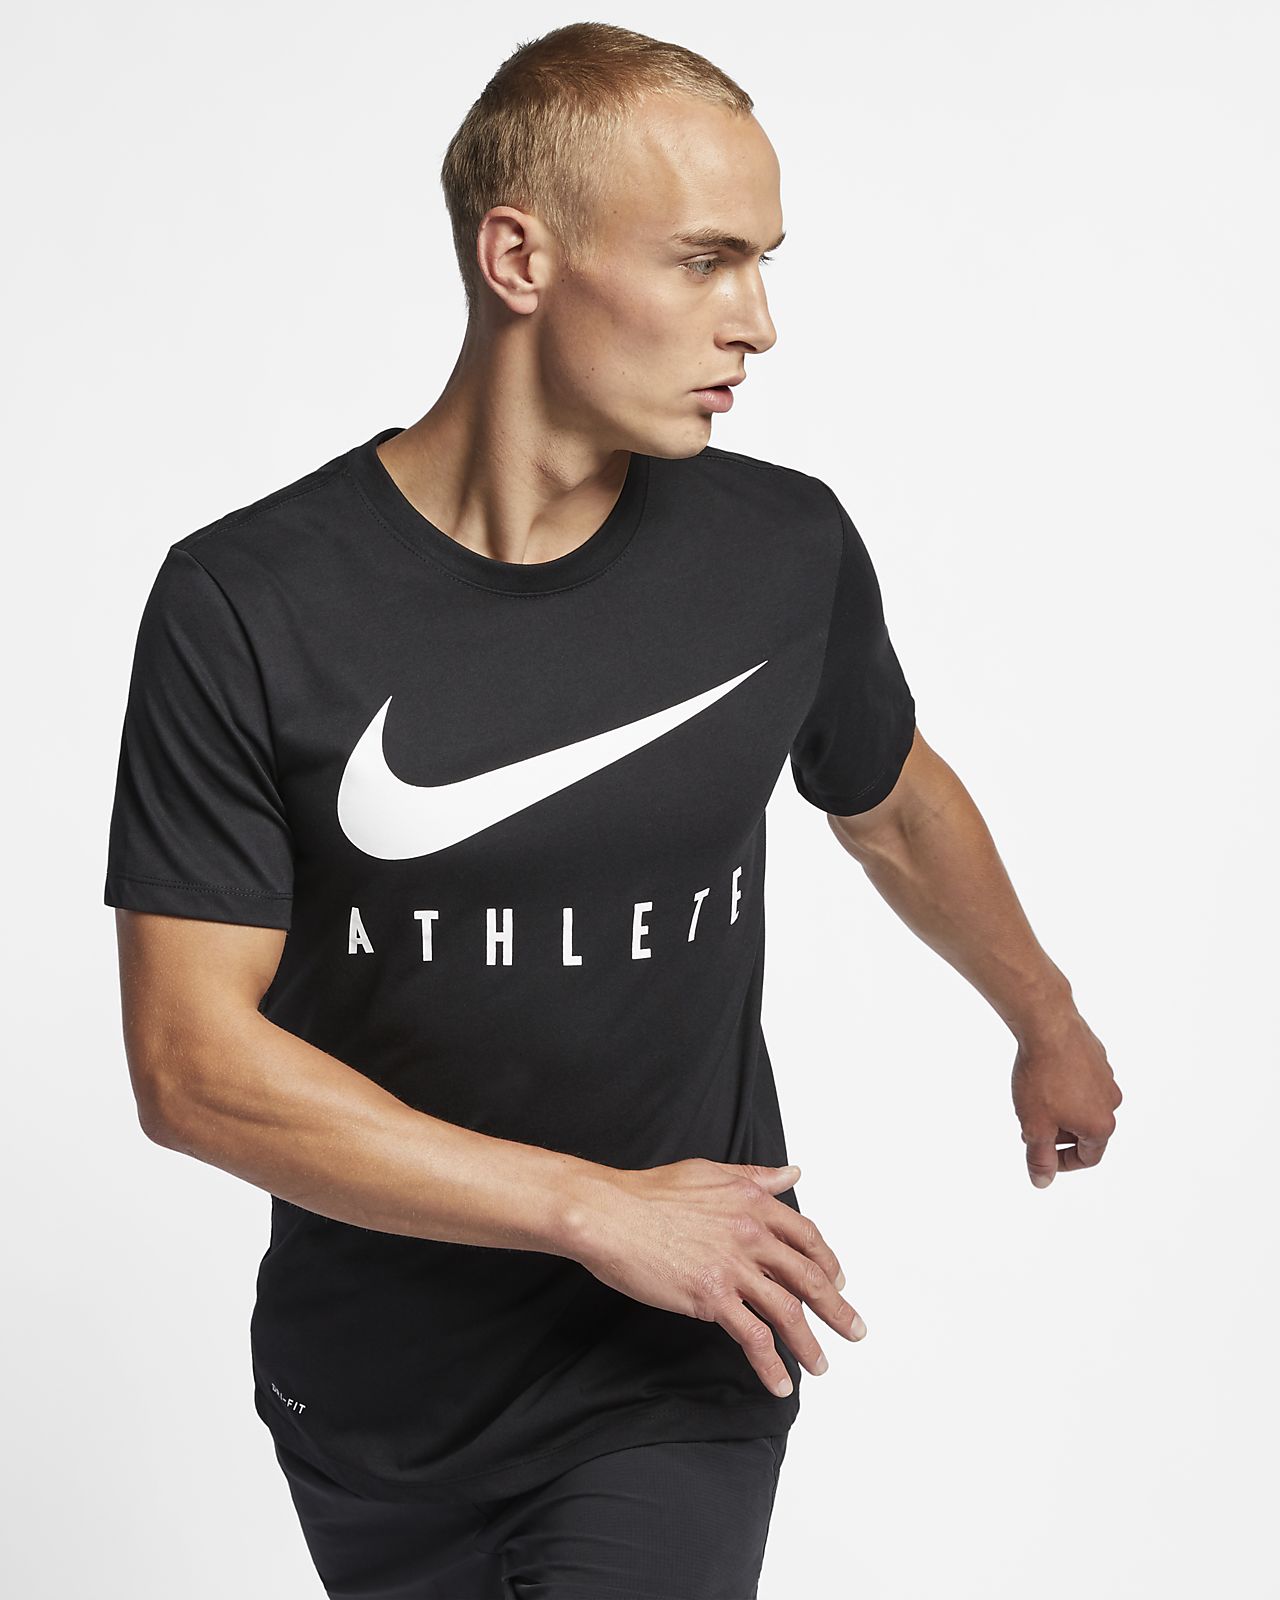 Nike Training Tee Shirt Best Sale, 56% OFF | lagence.tv